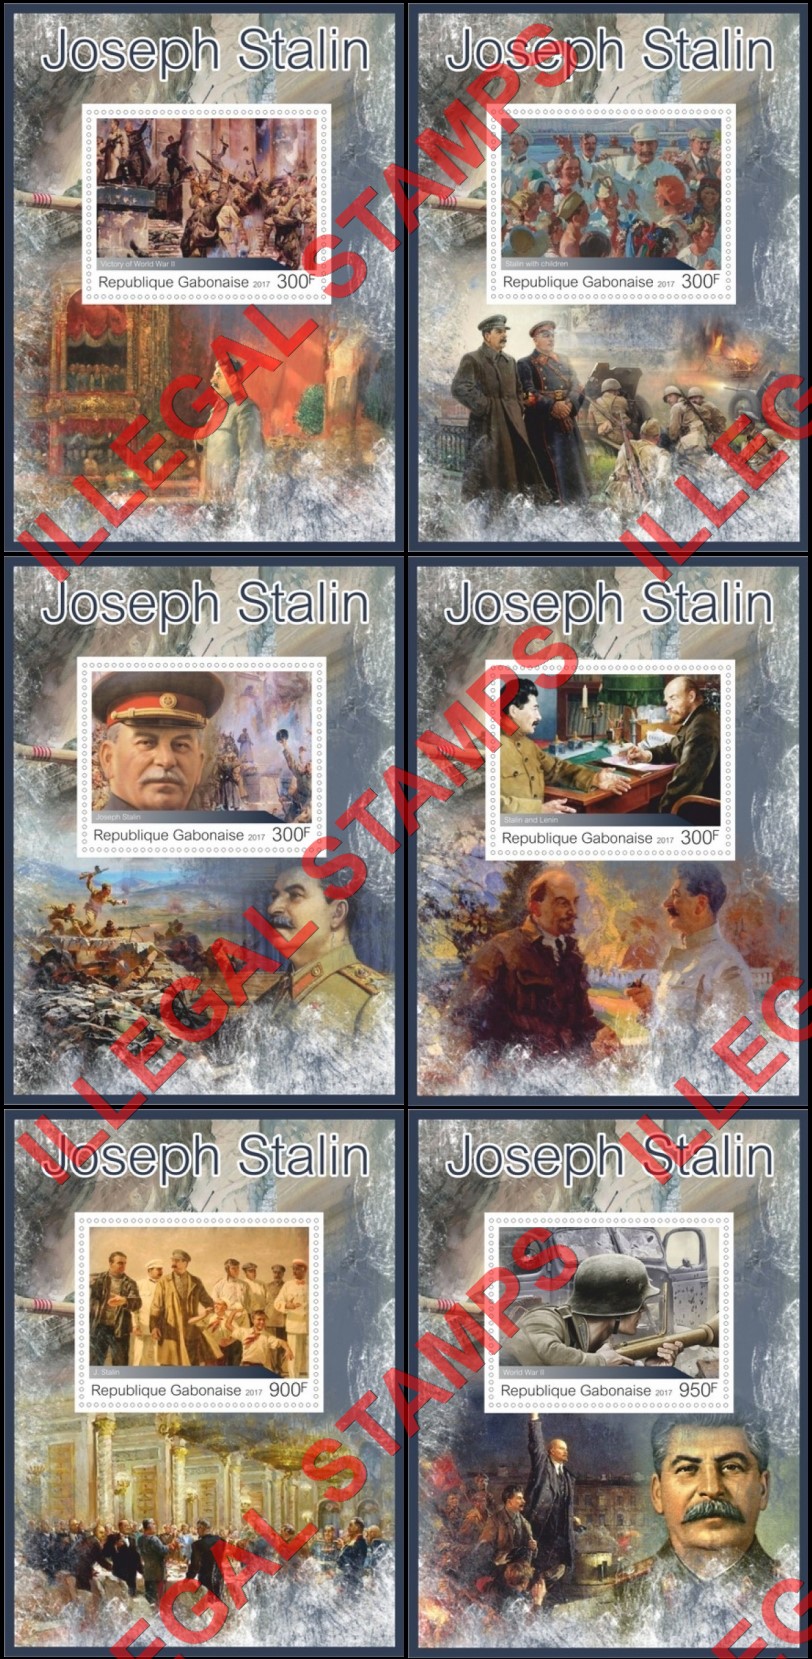 Gabon 2017 Joseph Stalin Illegal Stamp Souvenir Sheets of 1